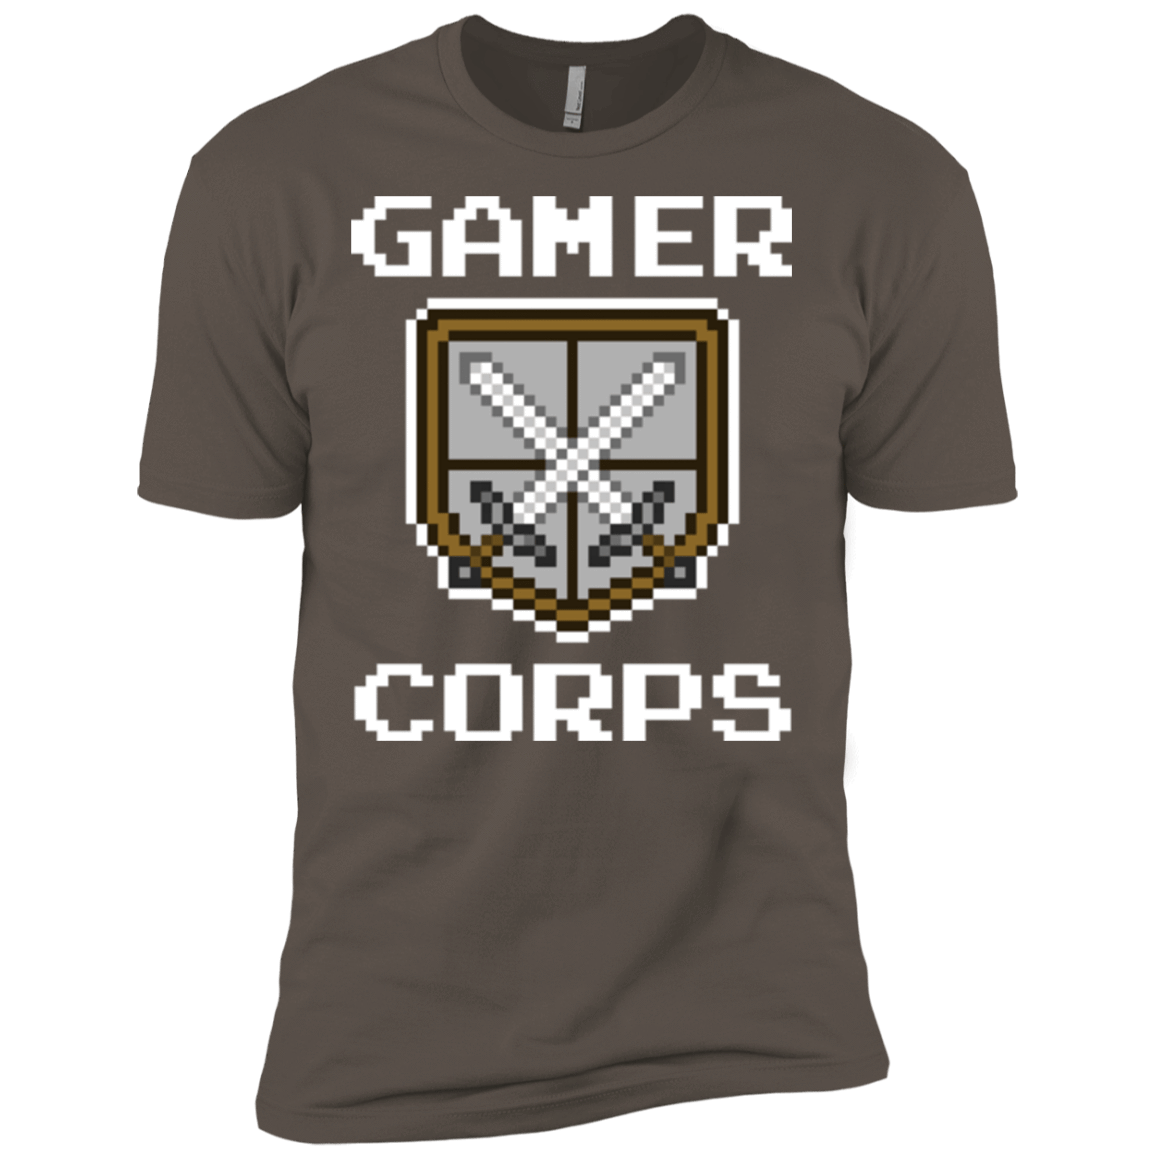 T-Shirts Warm Grey / X-Small Gamer corps Men's Premium T-Shirt